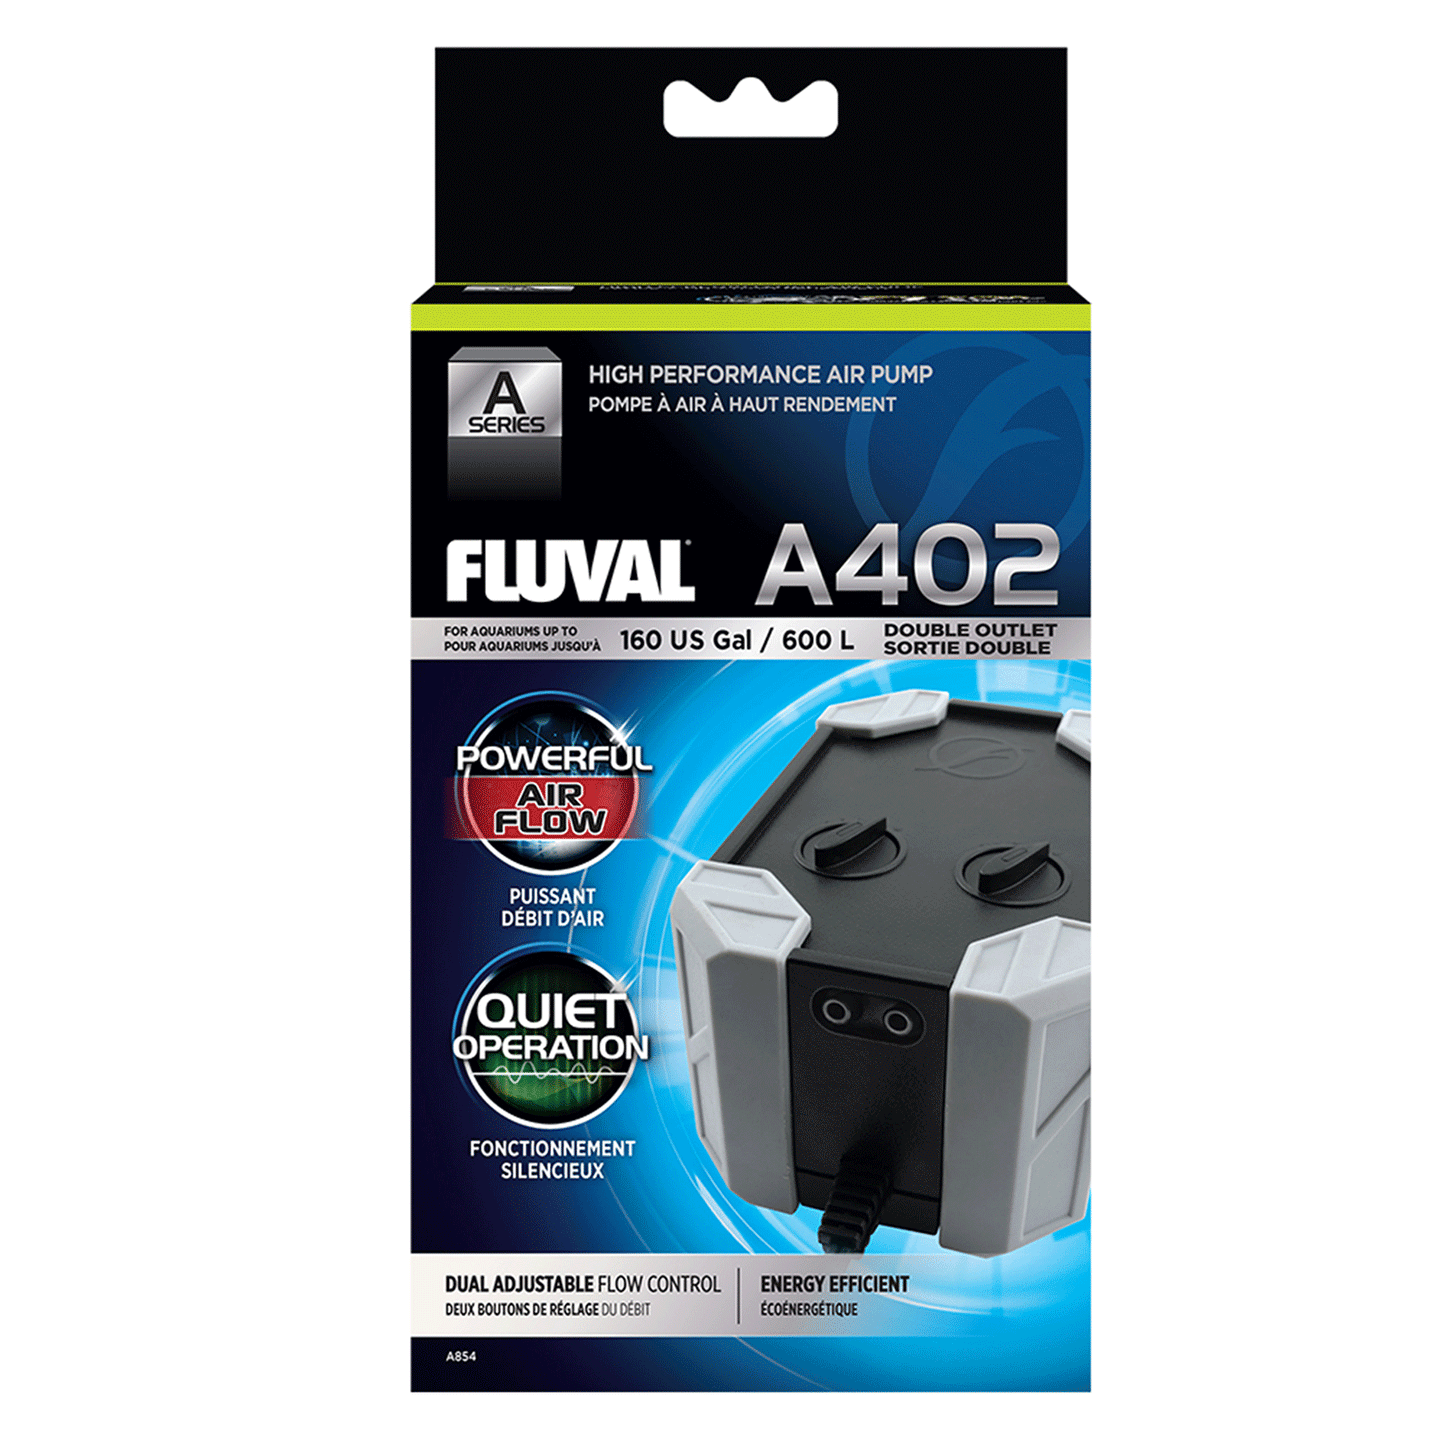 Fluval A402 Series Air Pump 330-370 LPH - 160 US Gal/ 600L - Double Outlet 4W